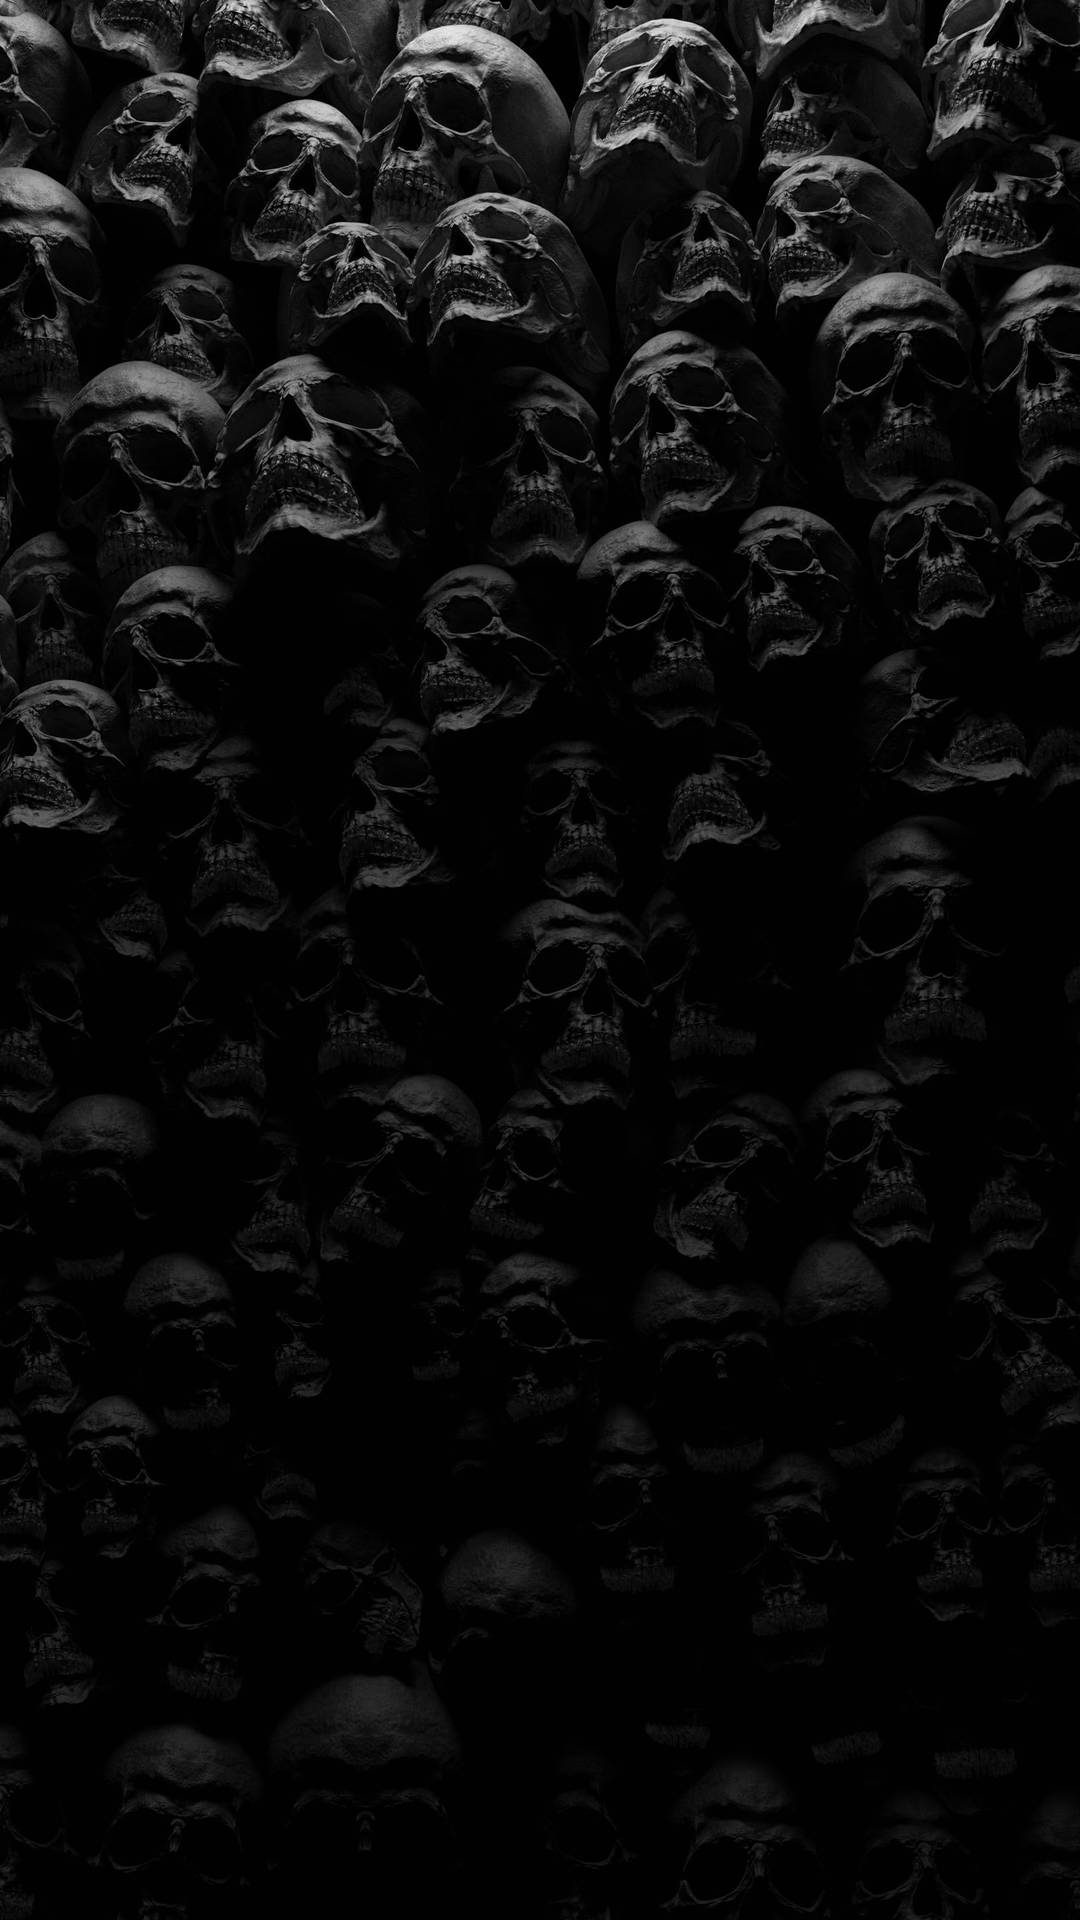 Lodret Tengkorak Skulls Wall Wallpaper